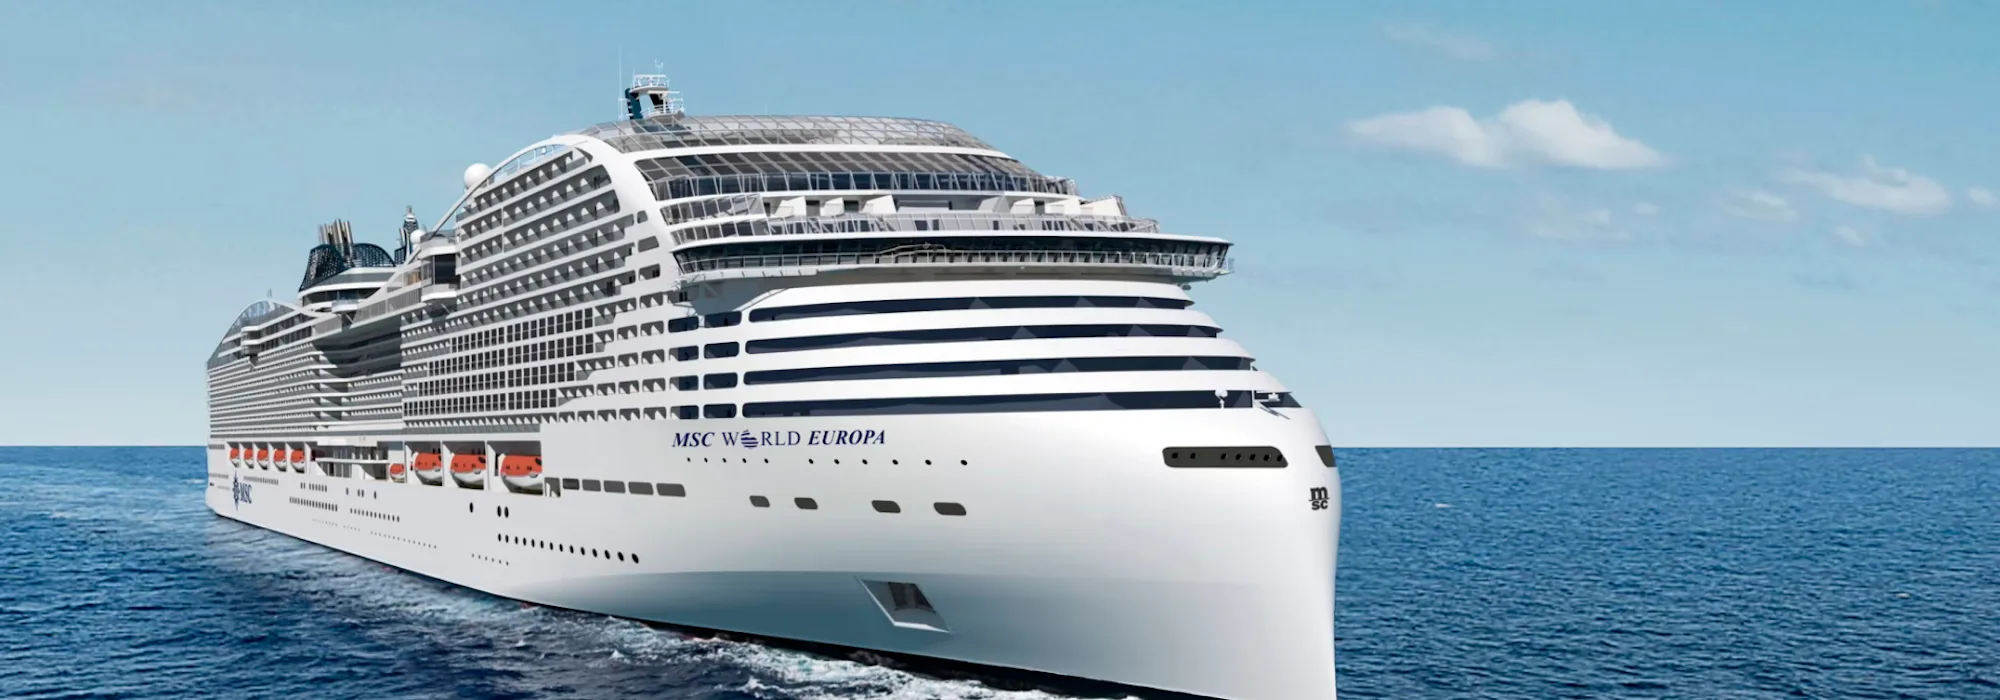 MSC World Europe - MSC Cruises